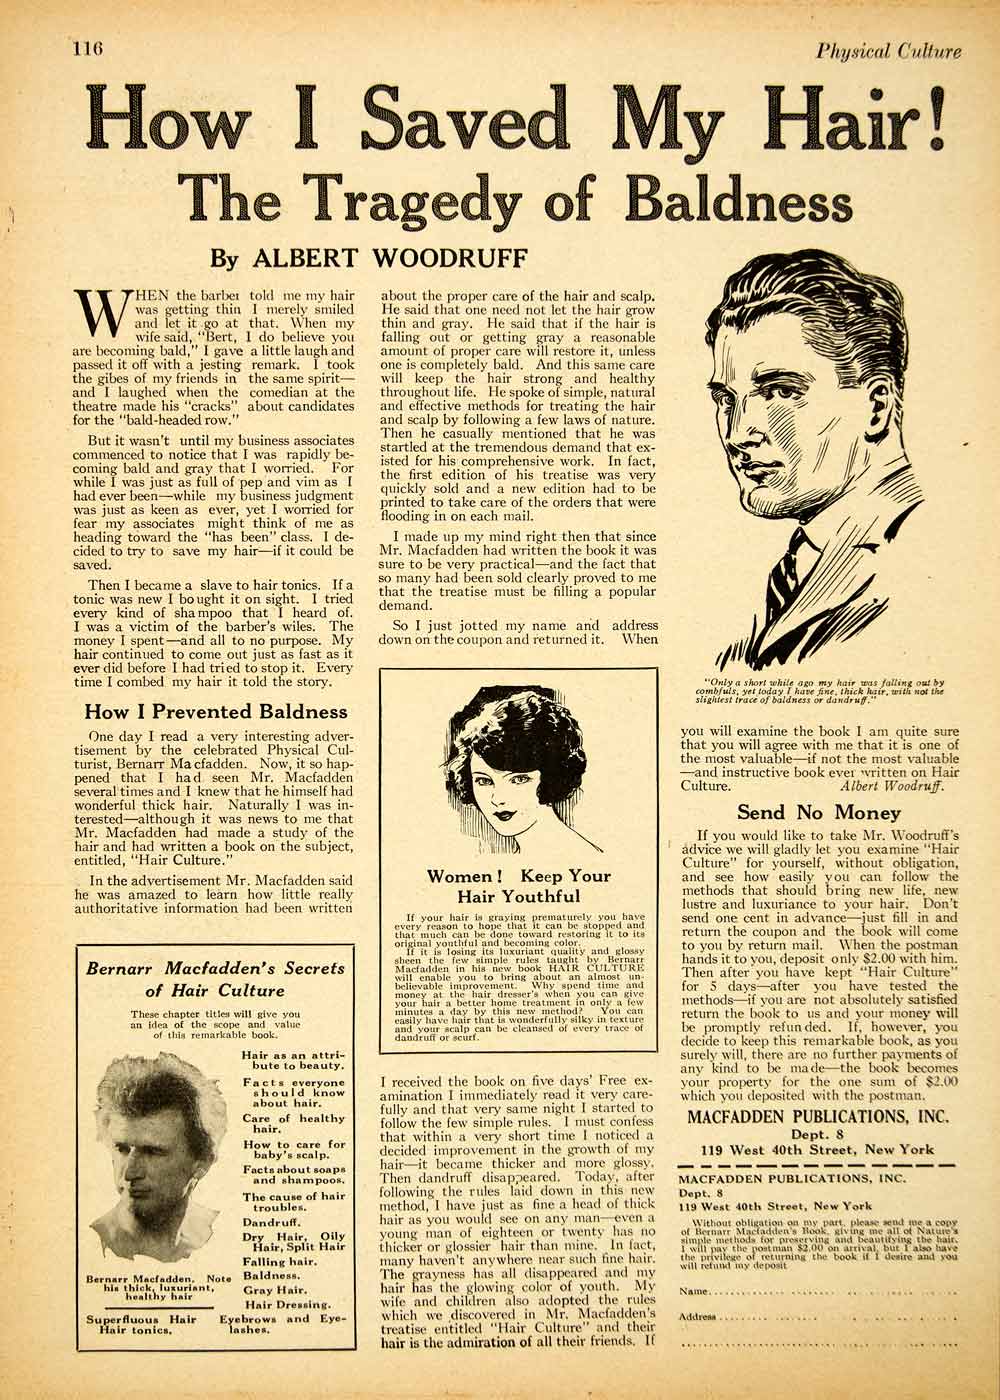 1922 Ad Baldness Bernarr Macfadden 119 West 40th St New York Hair Health YPC1